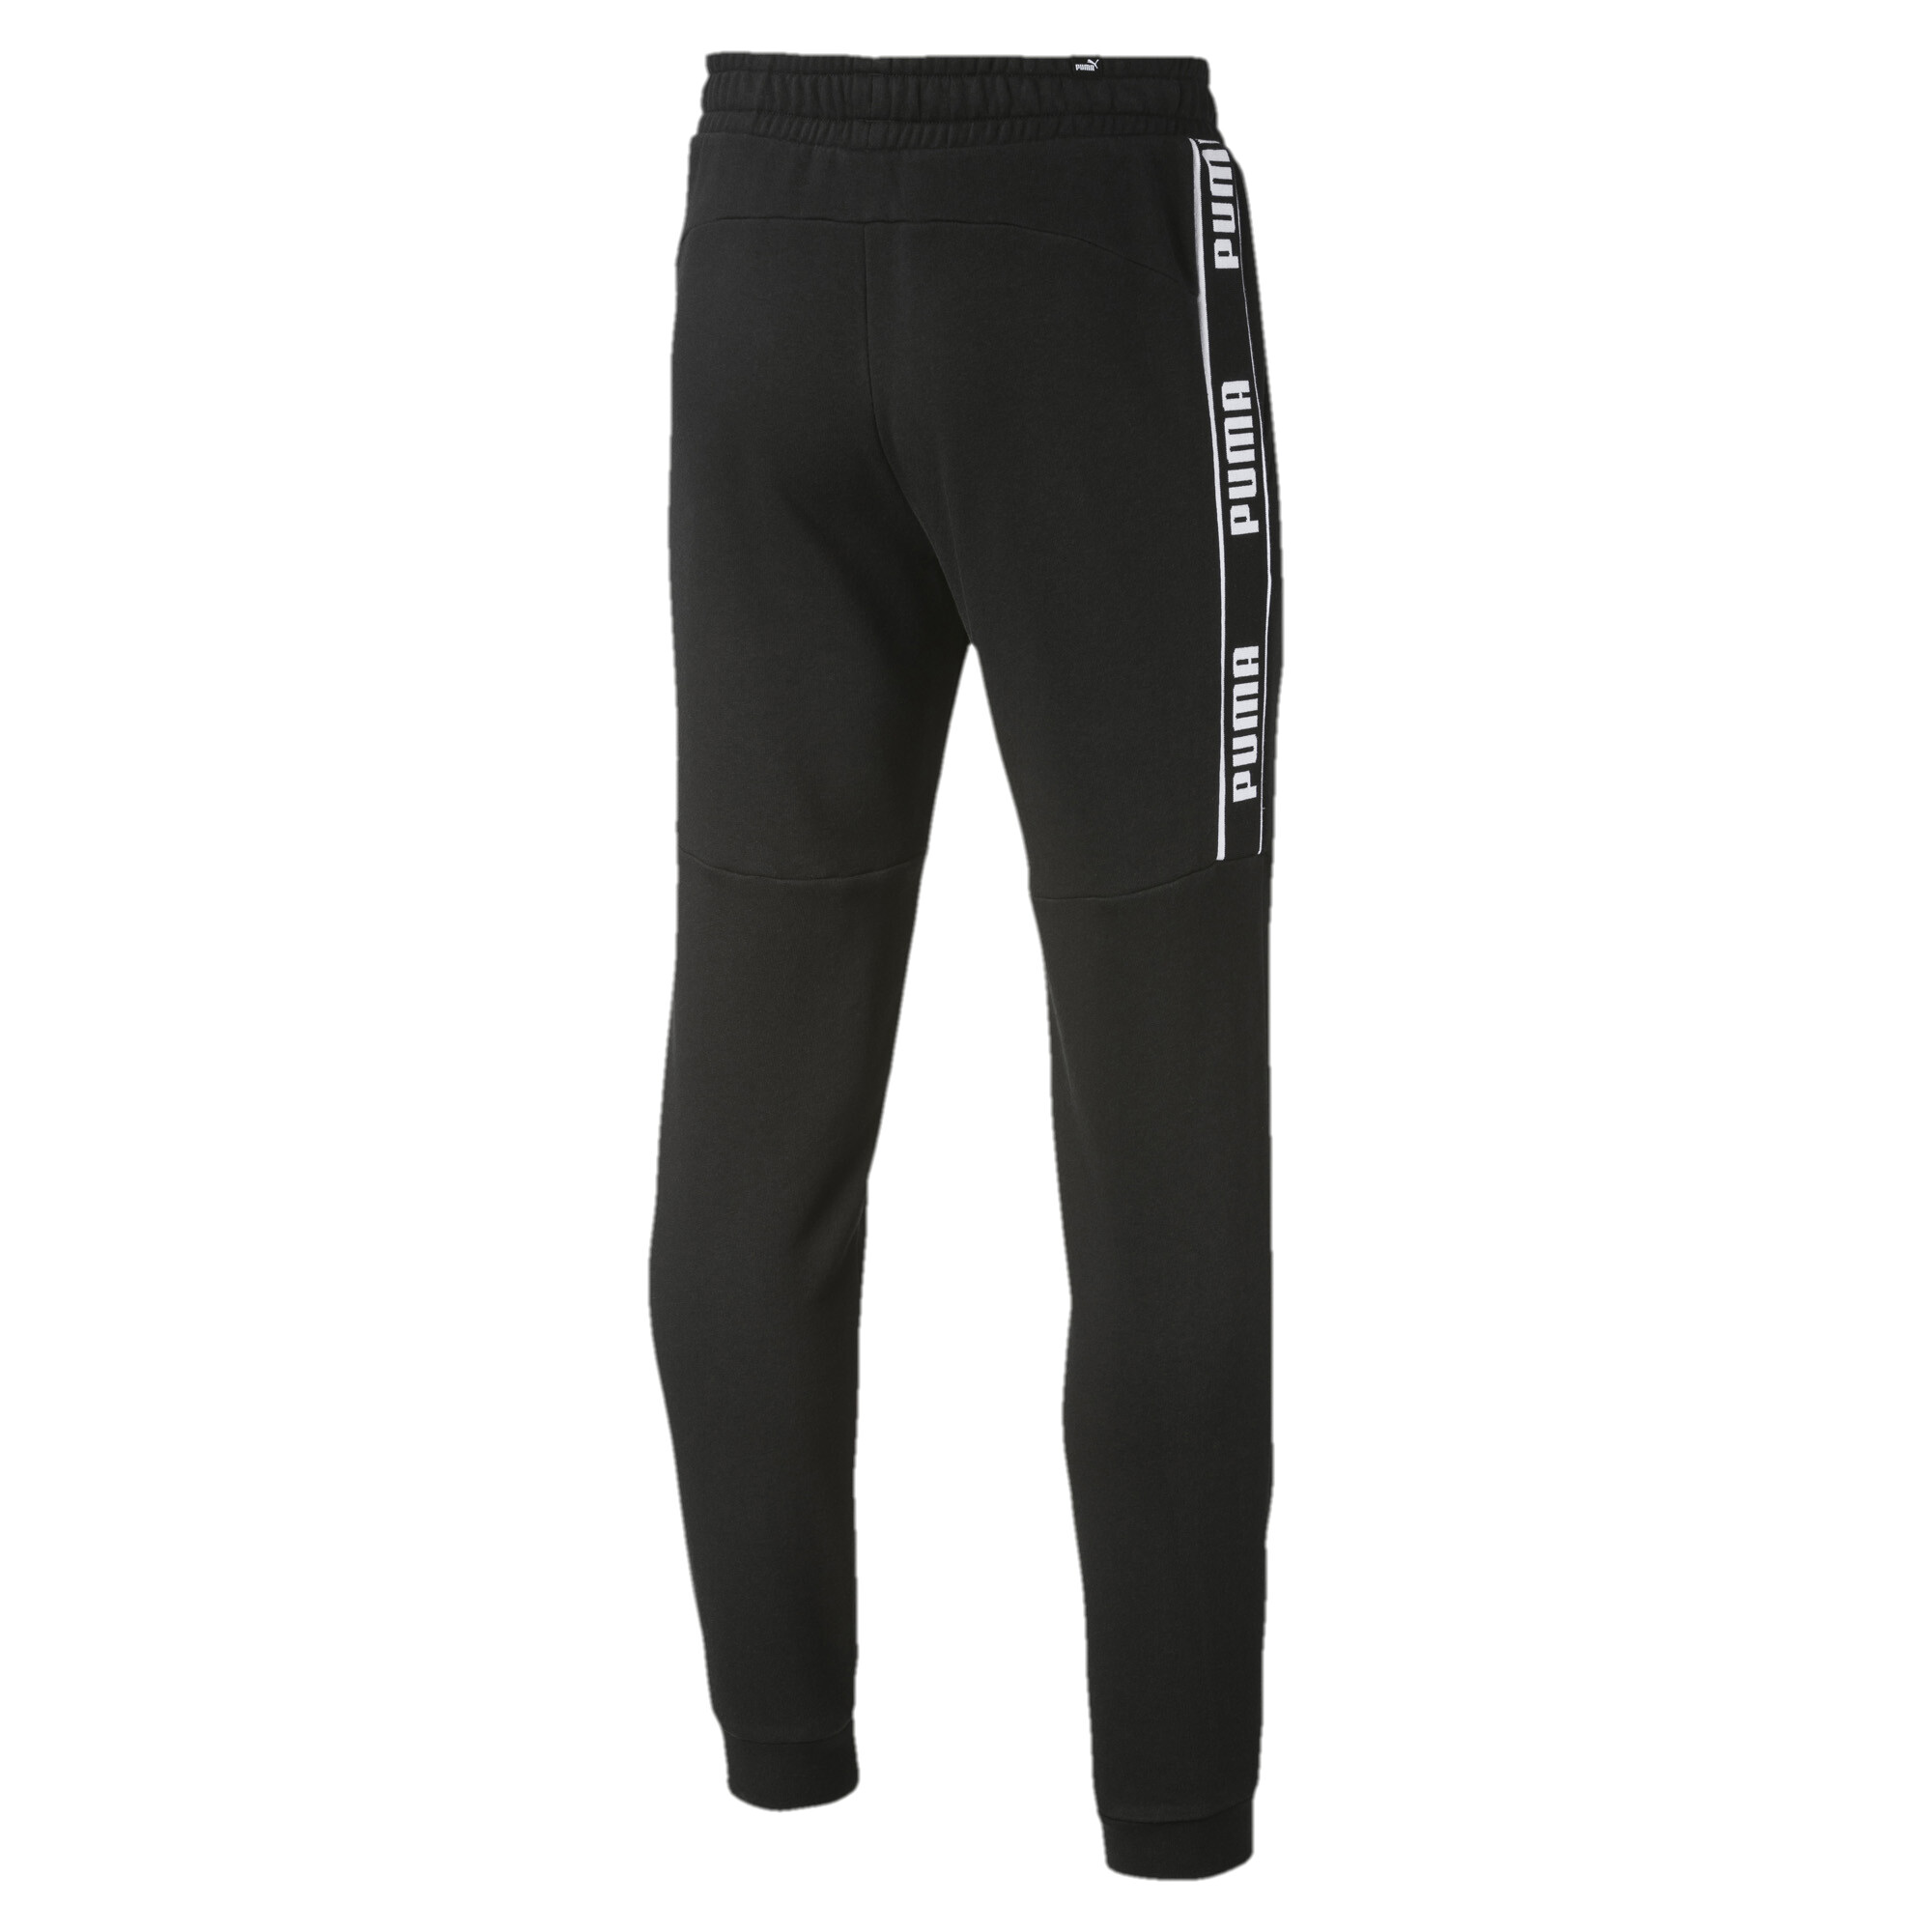 Men's Puma Amplified's Sweatpants, Black, Size S, Clothing